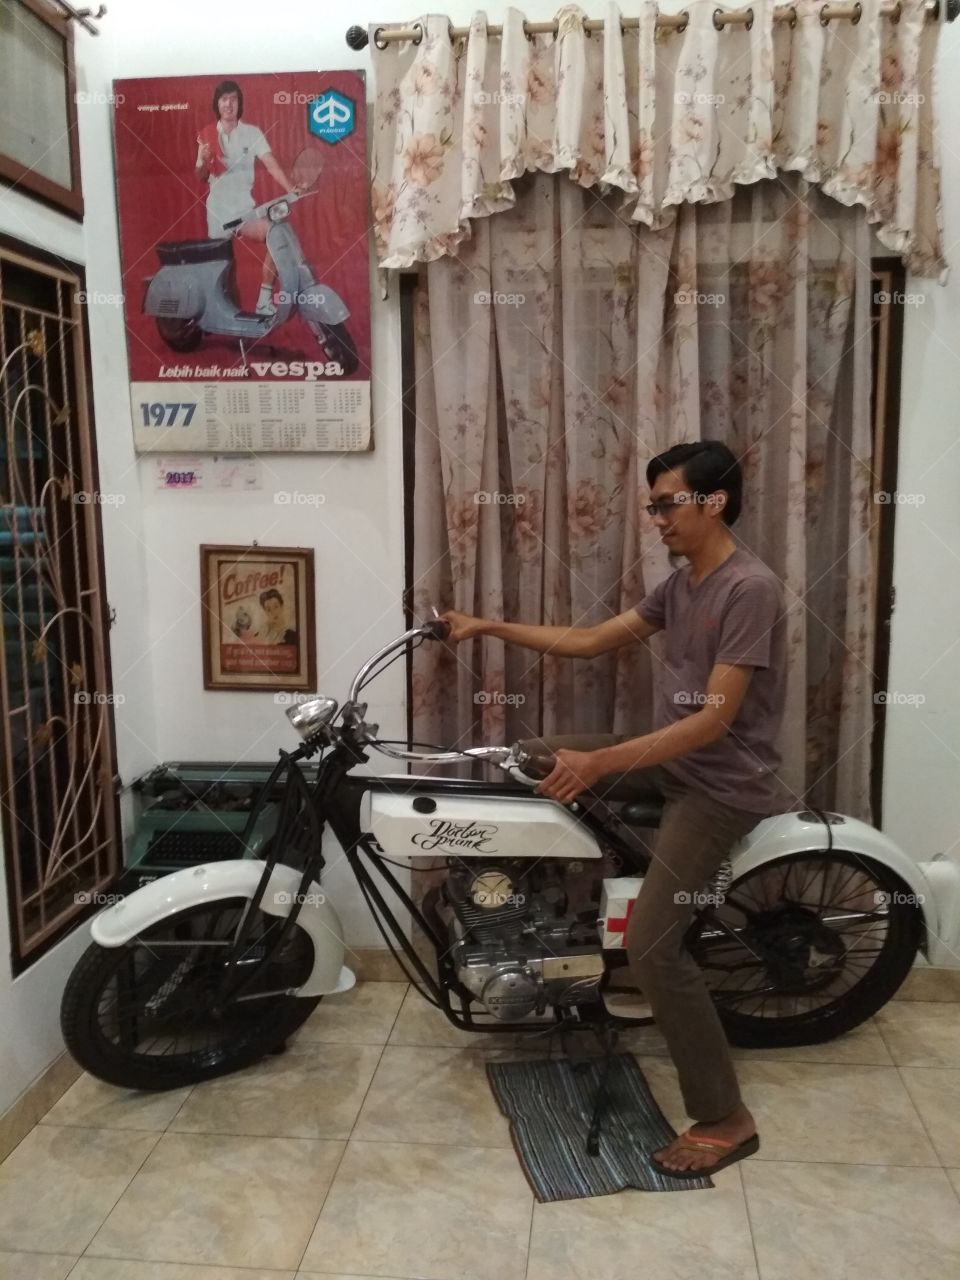 The Old Motorcycle, Classic Legendaris